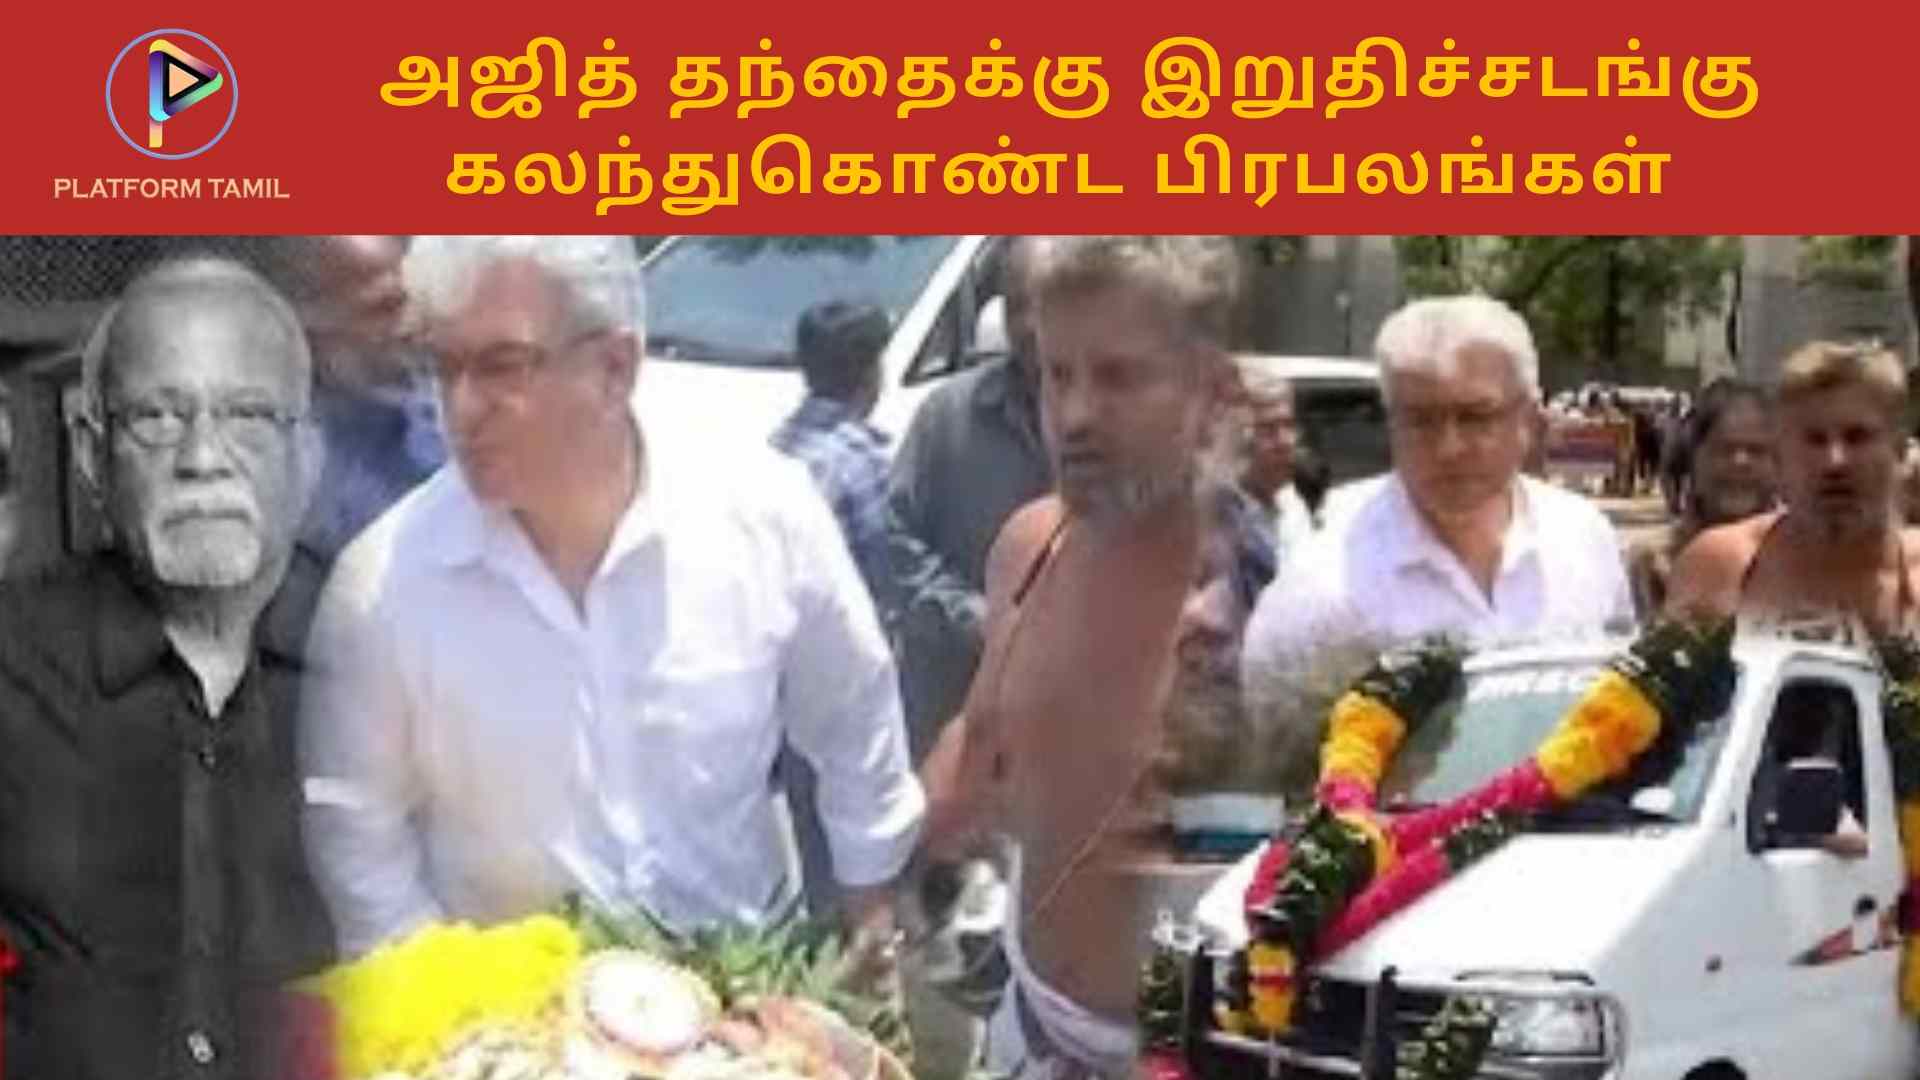 Ajith Kumar Father Funeral - Platform Tamil